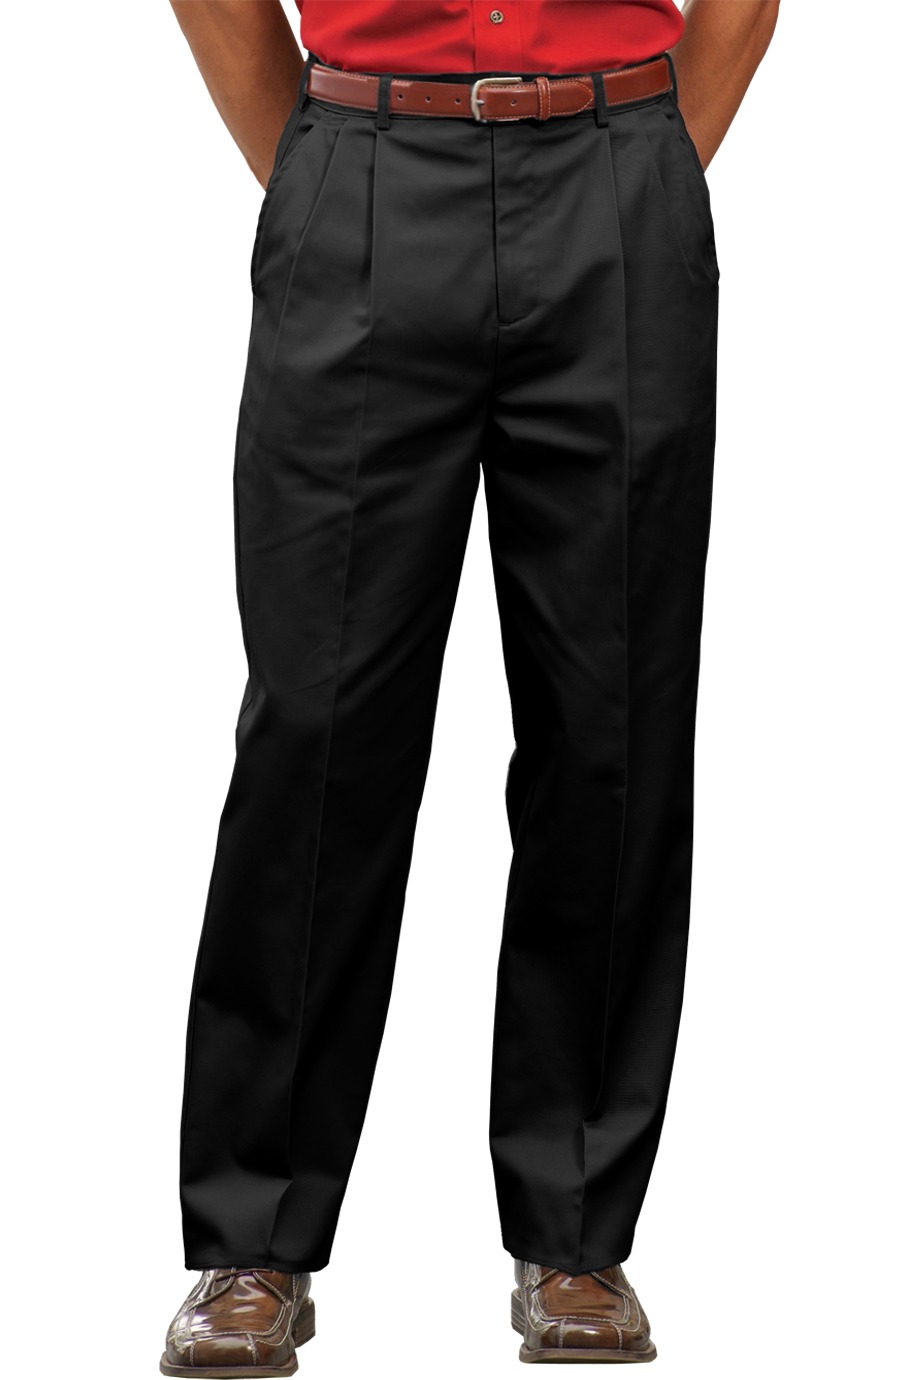 Edwards Garment 2677 - Men's Utility Pleated Pant